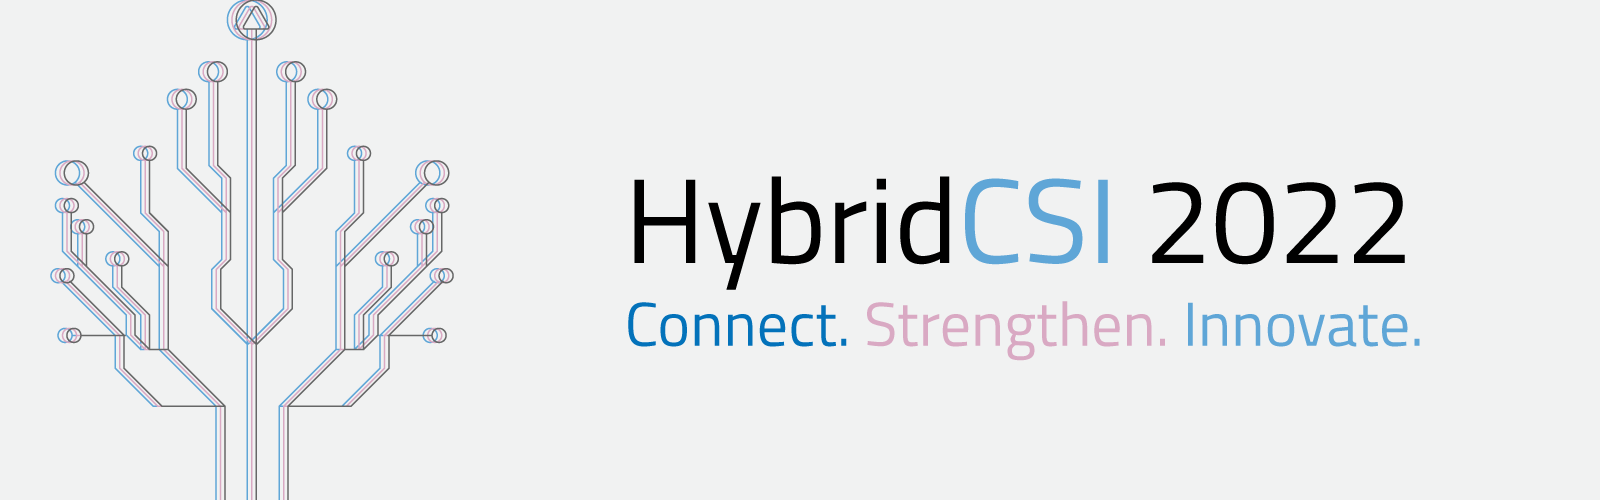 Hybrid-CSI-POST-EVENT-Landing-Page-Banner